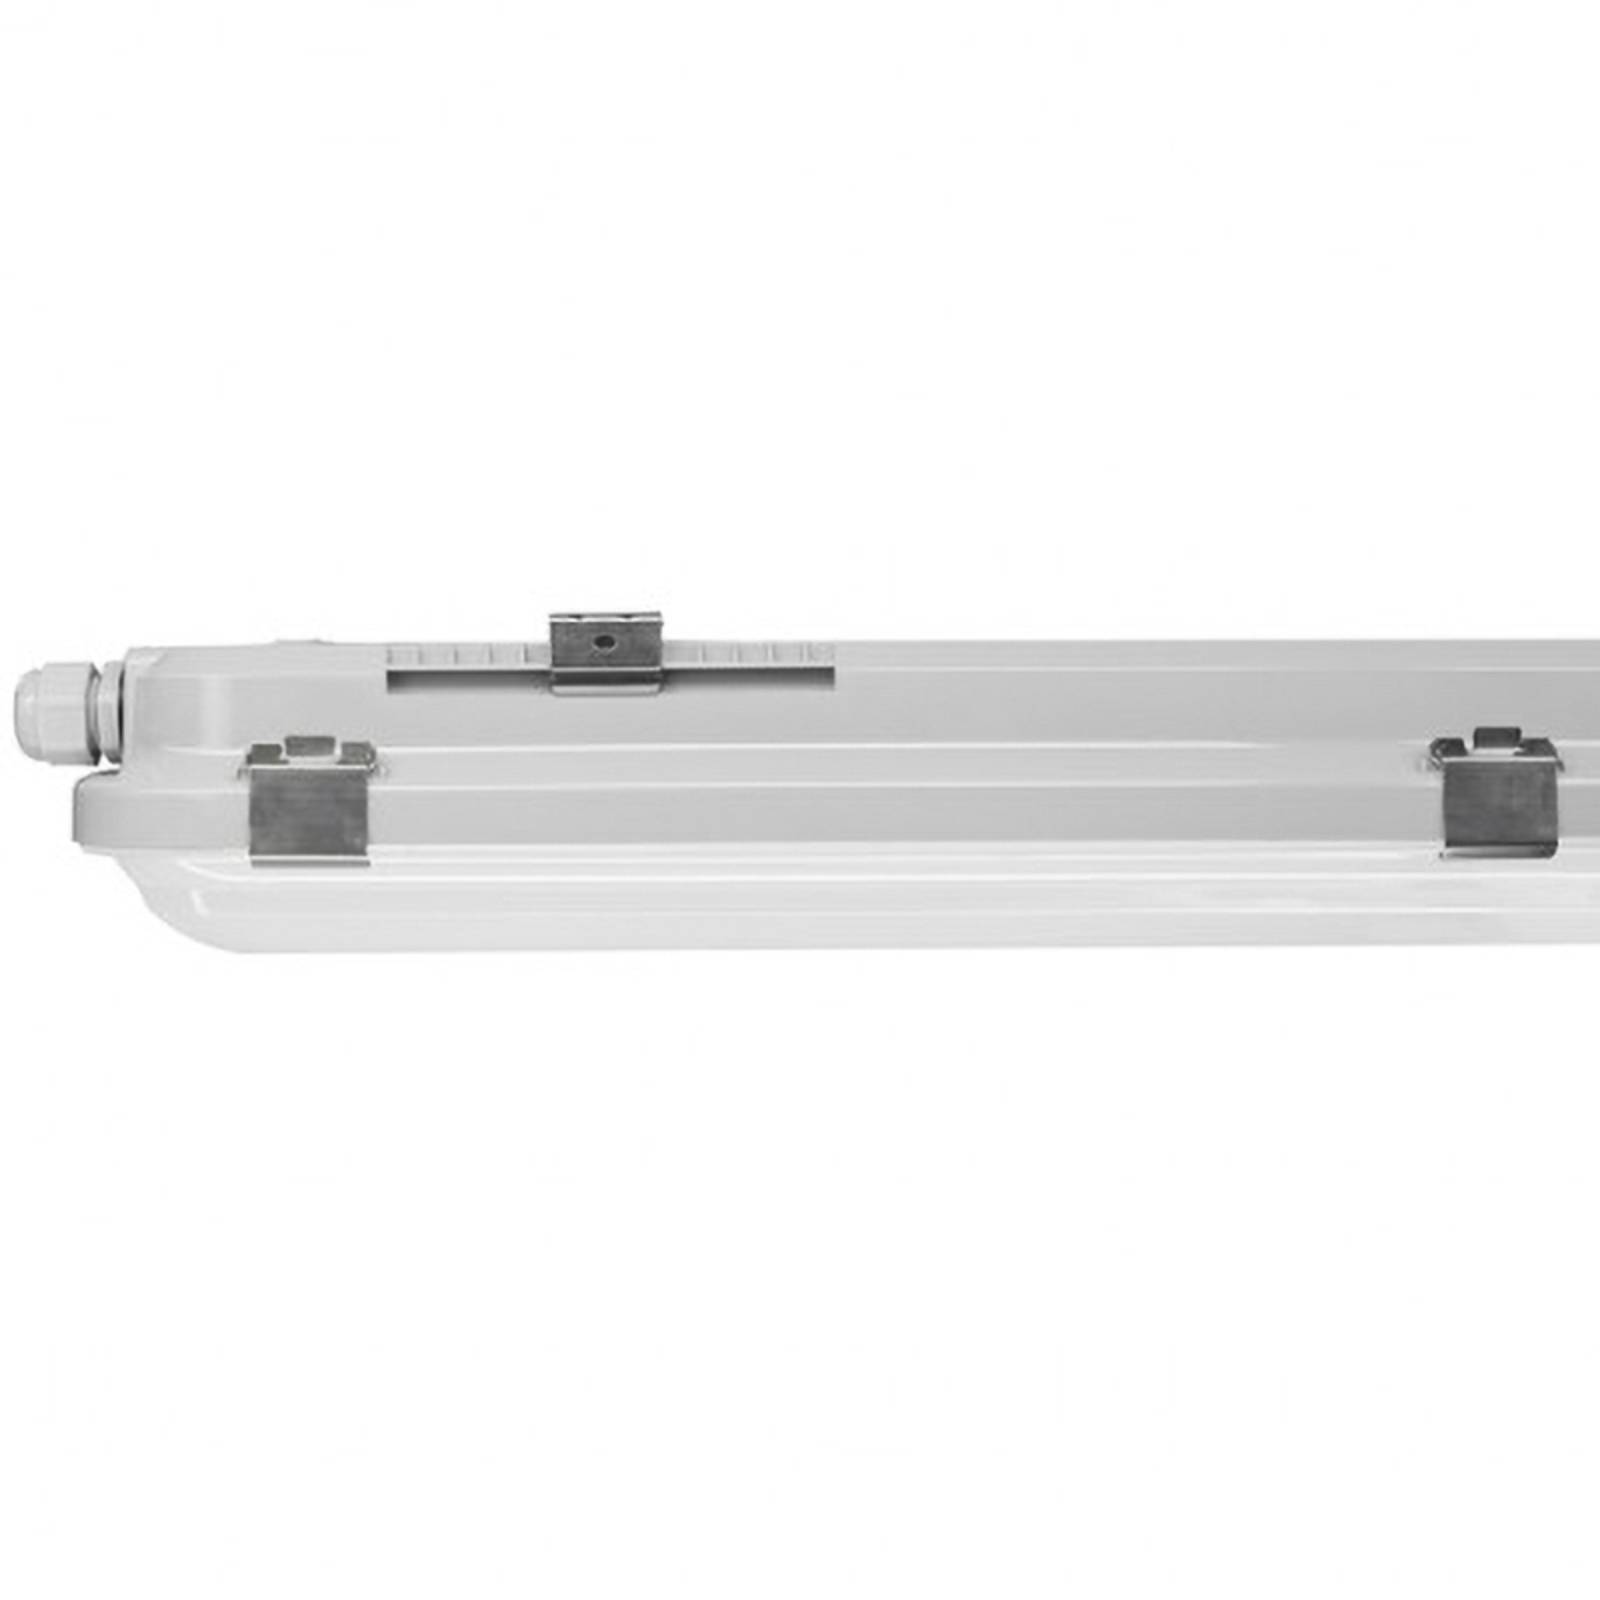 InnoGreen AQUOS 3.0 BASELine LED-lampa 152cm 840